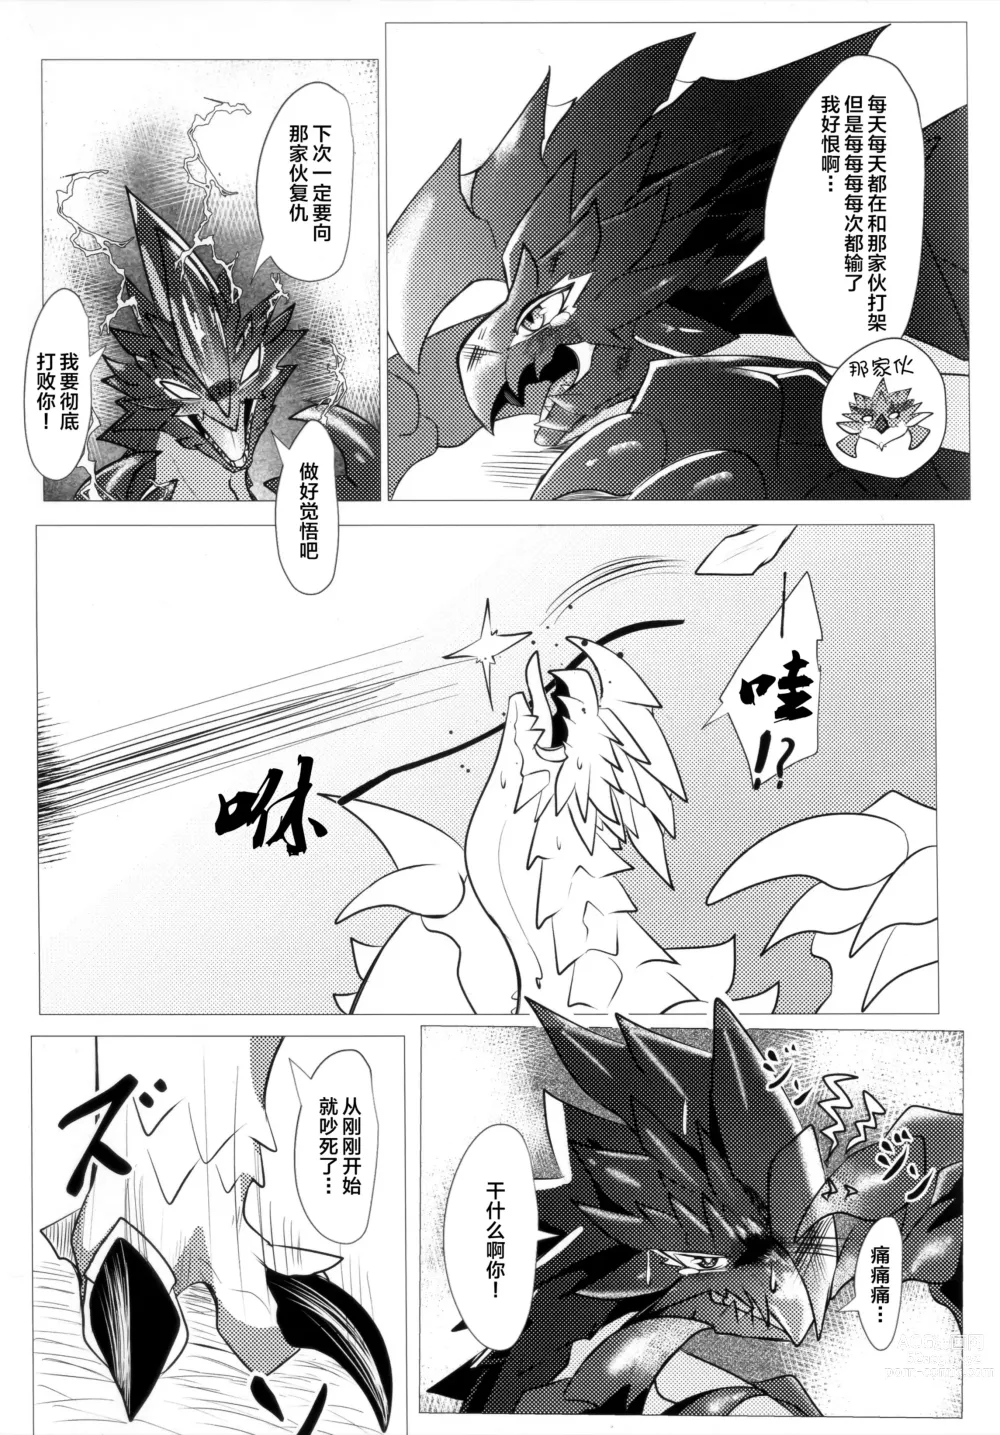 Page 4 of doujinshi 反逆之翼的交汇之刻